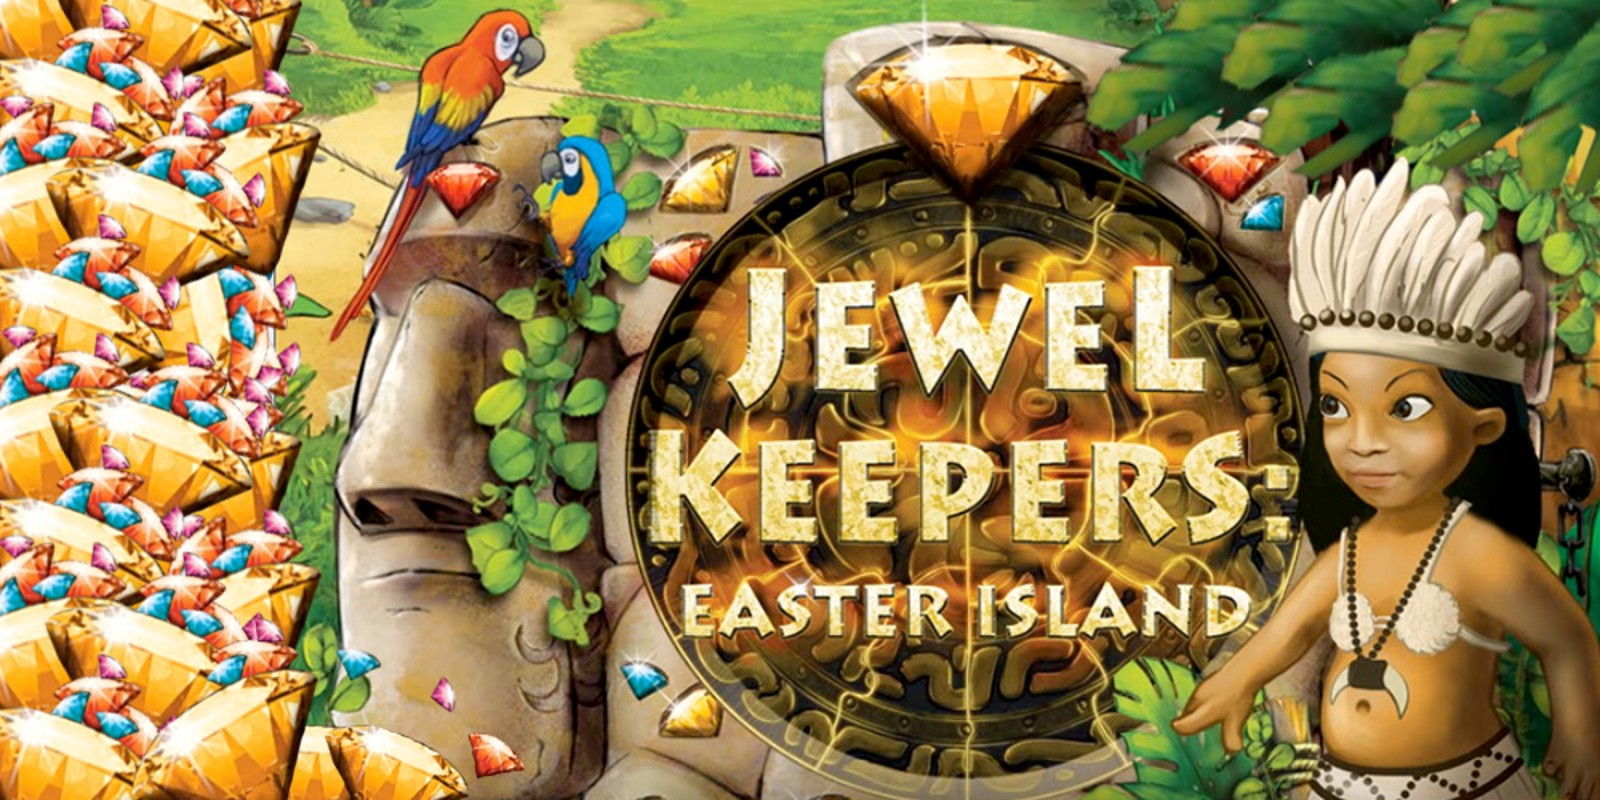 jewel keepers easter island